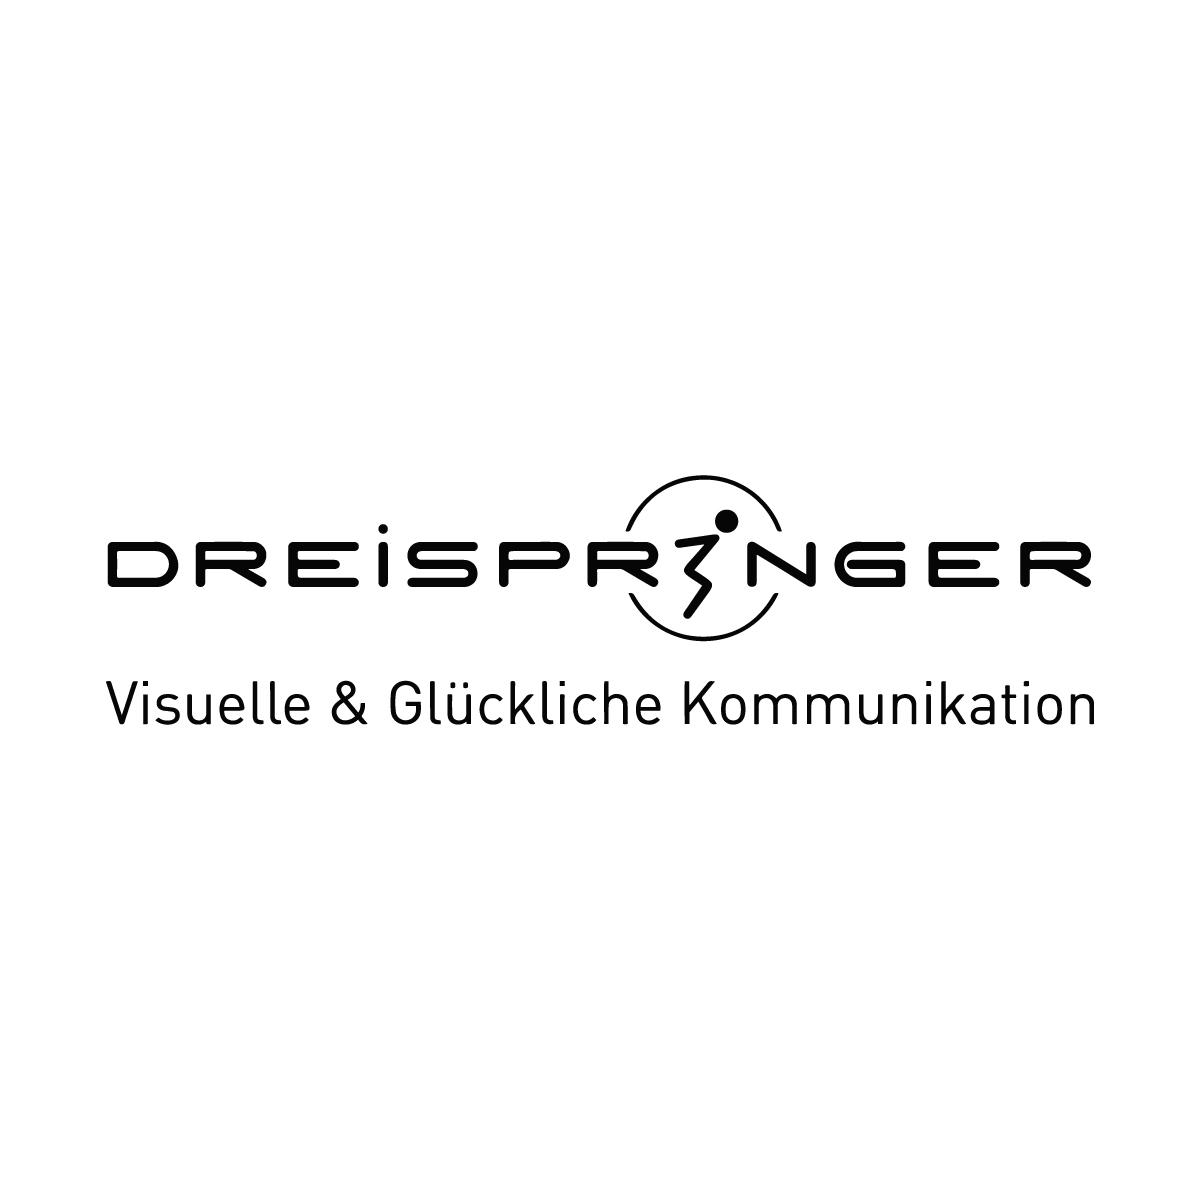 Dreispringer GmbH in Berlin